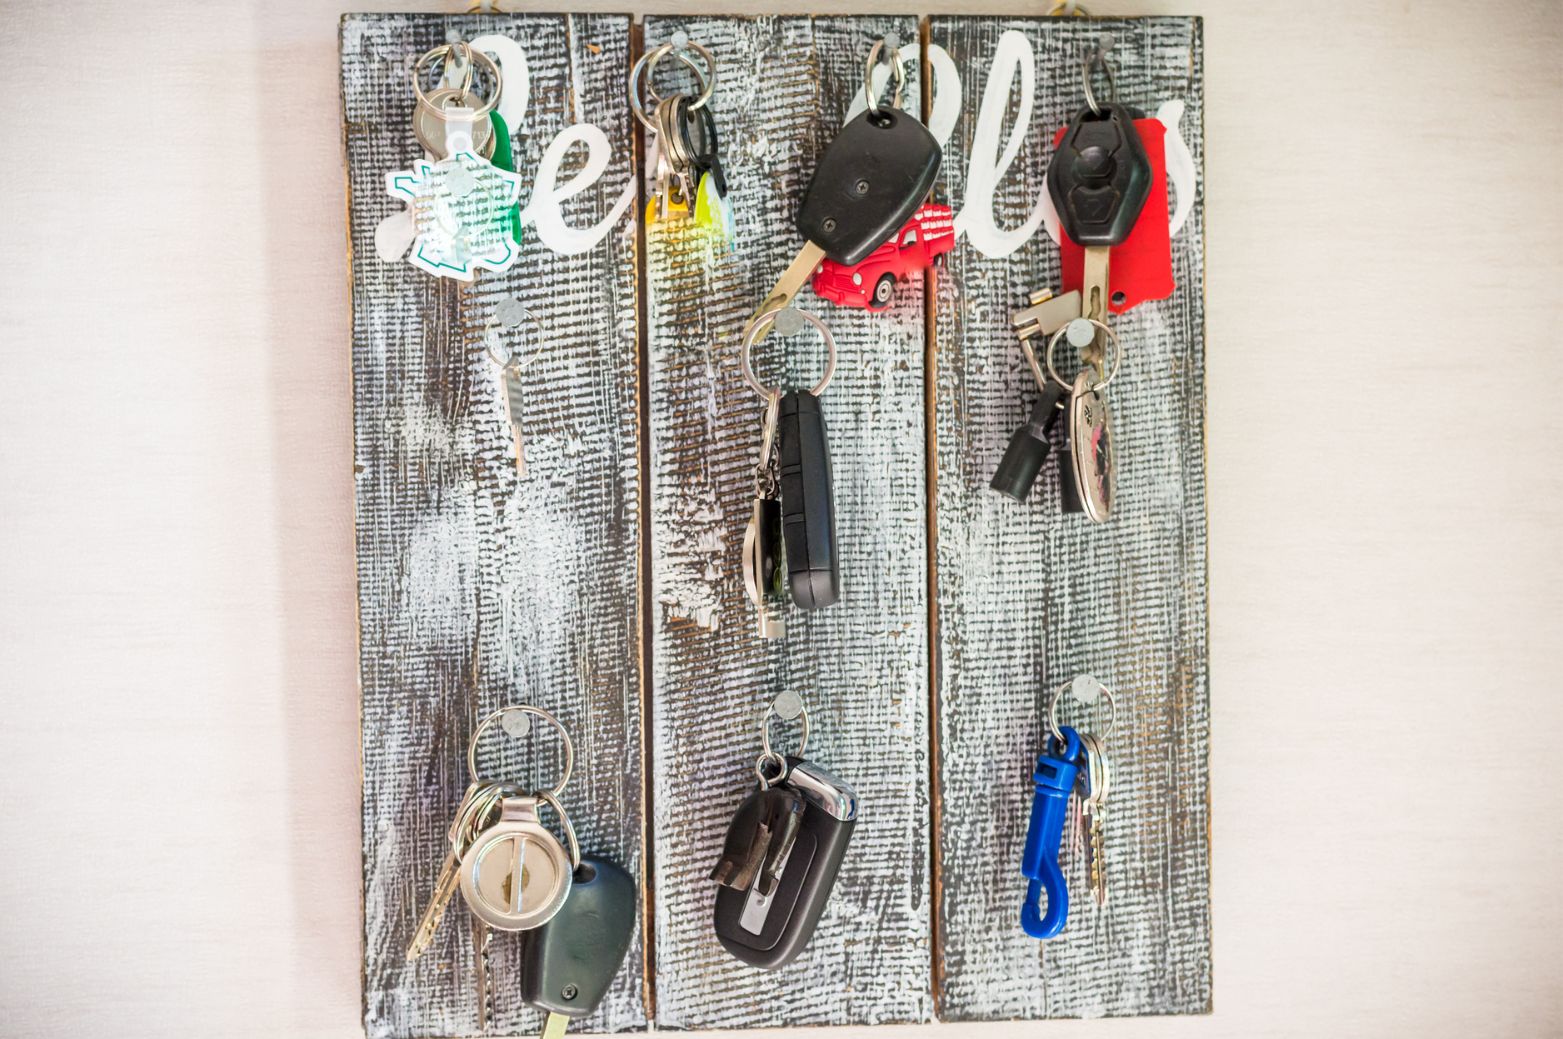 Hanging car keys